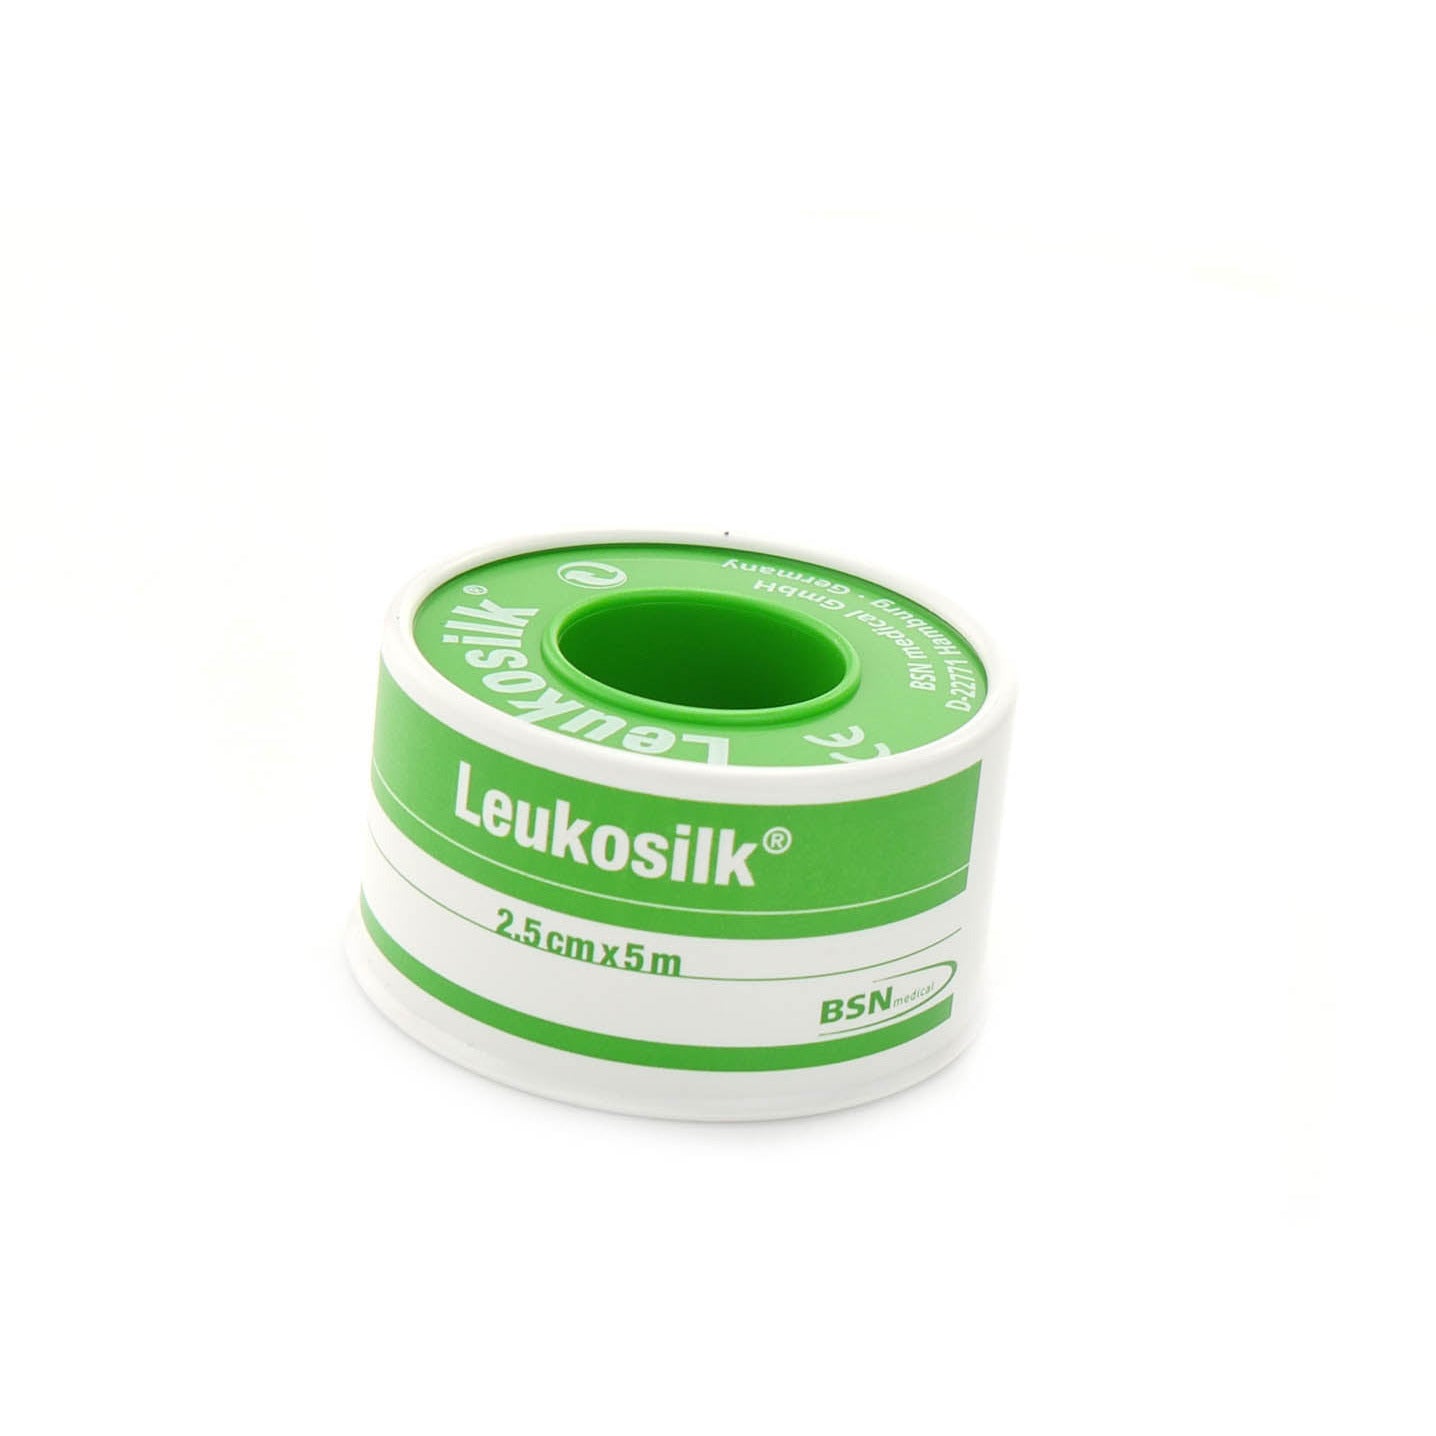 Leukosilk Smooth Pourous Adhesive Tape - 2.5cm x 5m SINGLE